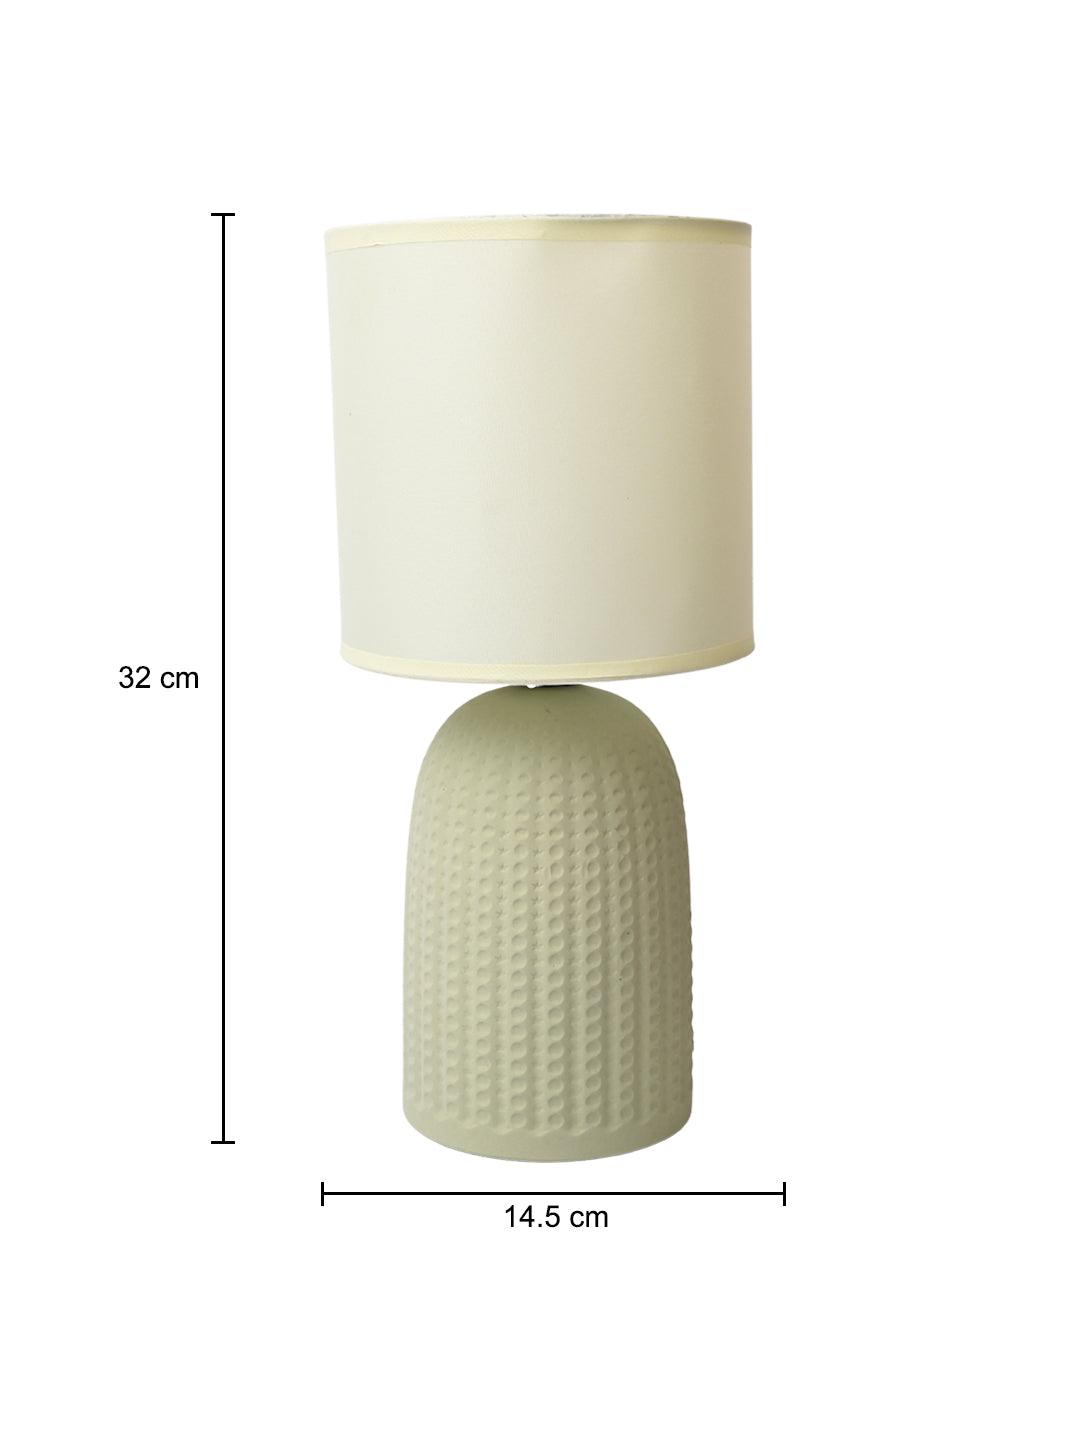 Stylish Pastel-Green Table Lamp